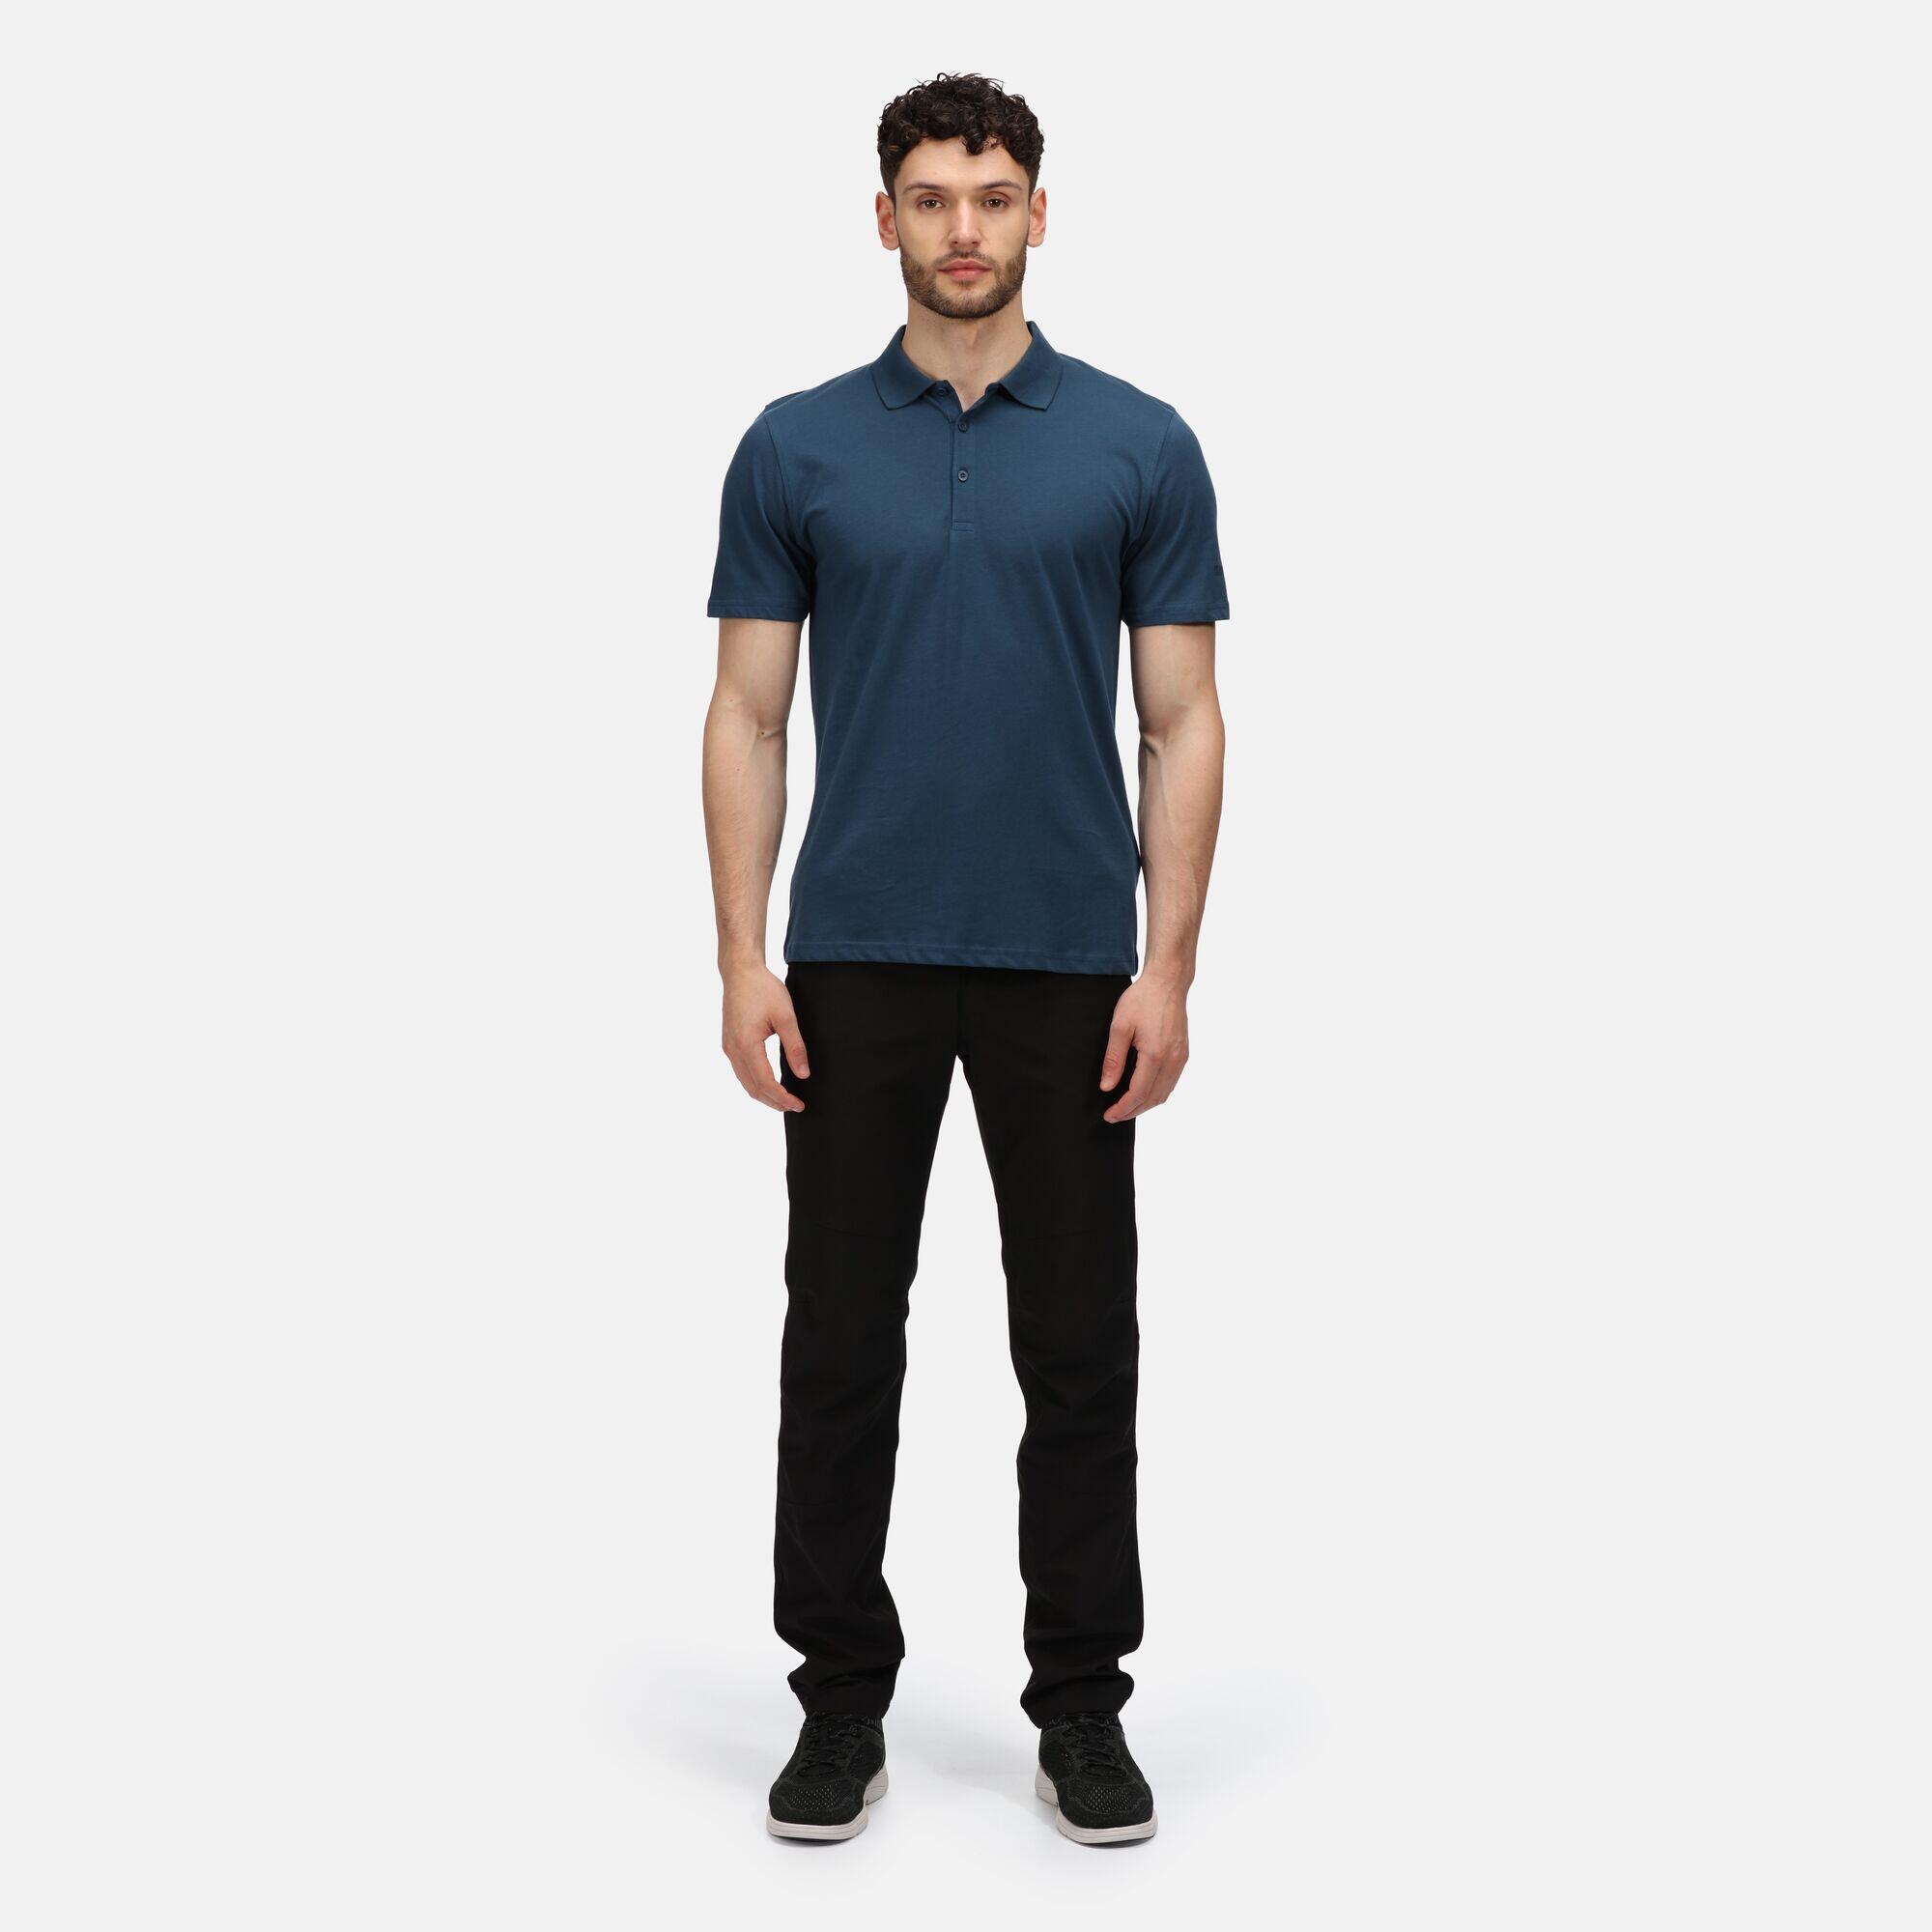 Sinton Men's Fitness Short Sleeve Polo Shirt - Moonlight Denim 3/5